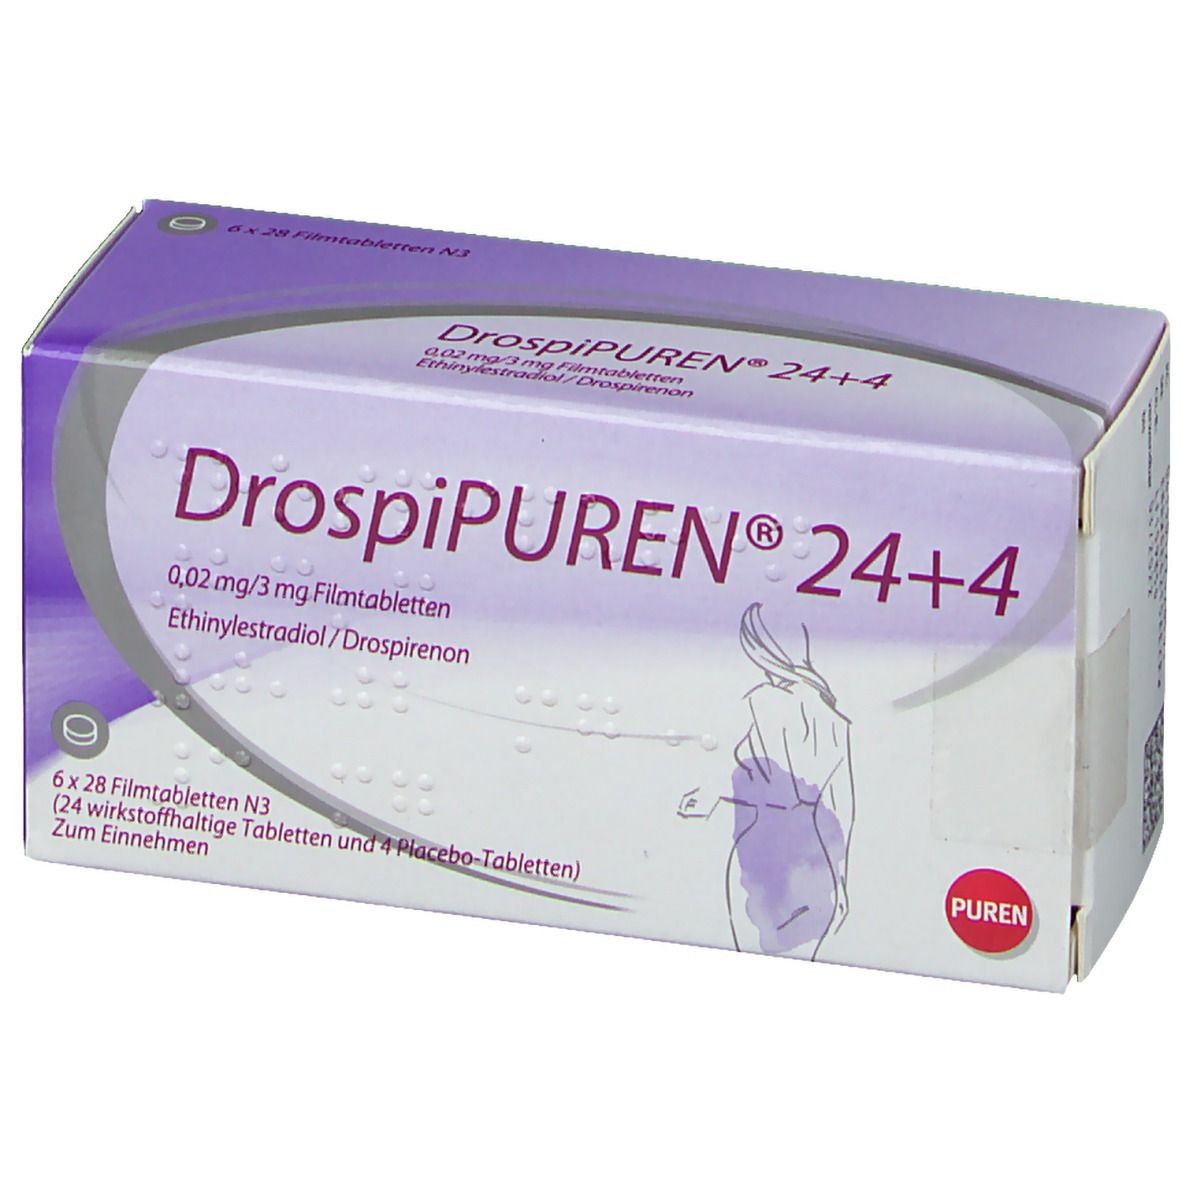 DrospiPUREN® 24+4 0,02 mg/3 mg